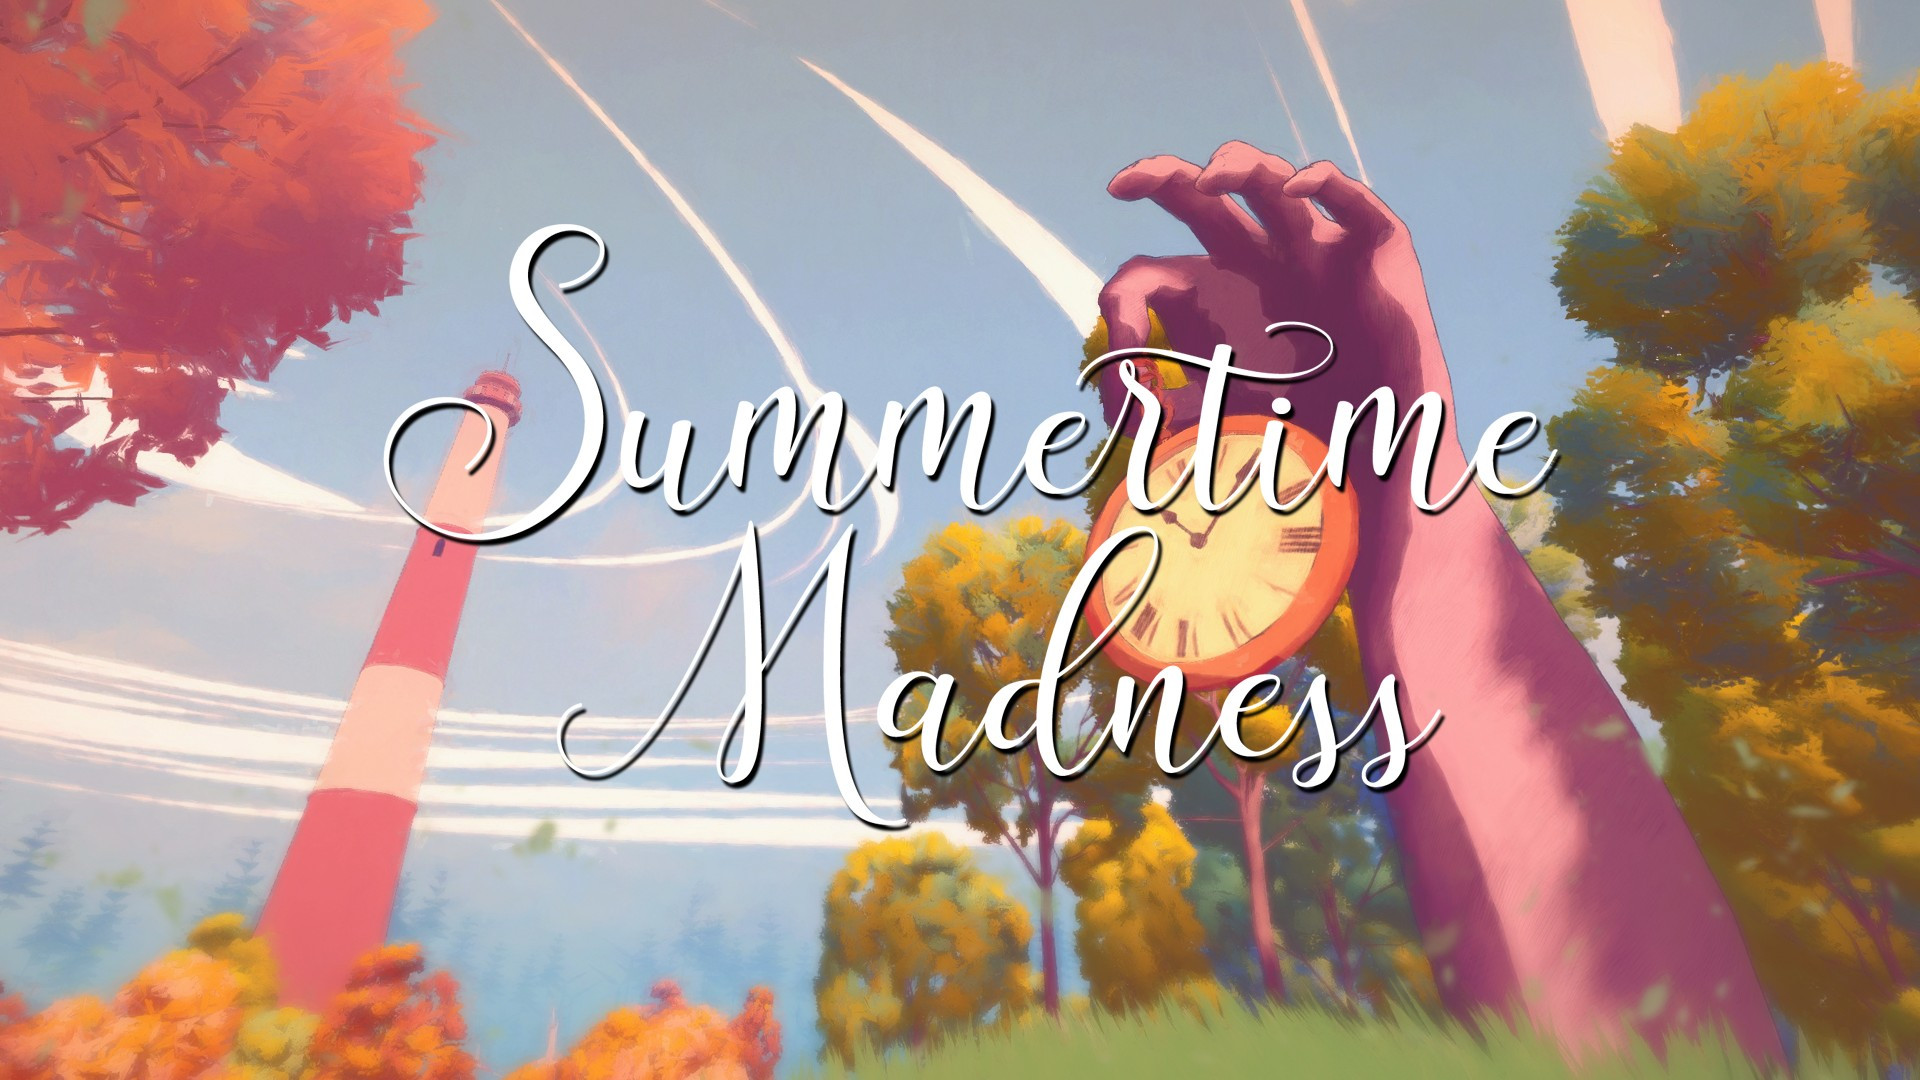 summertime madness myley